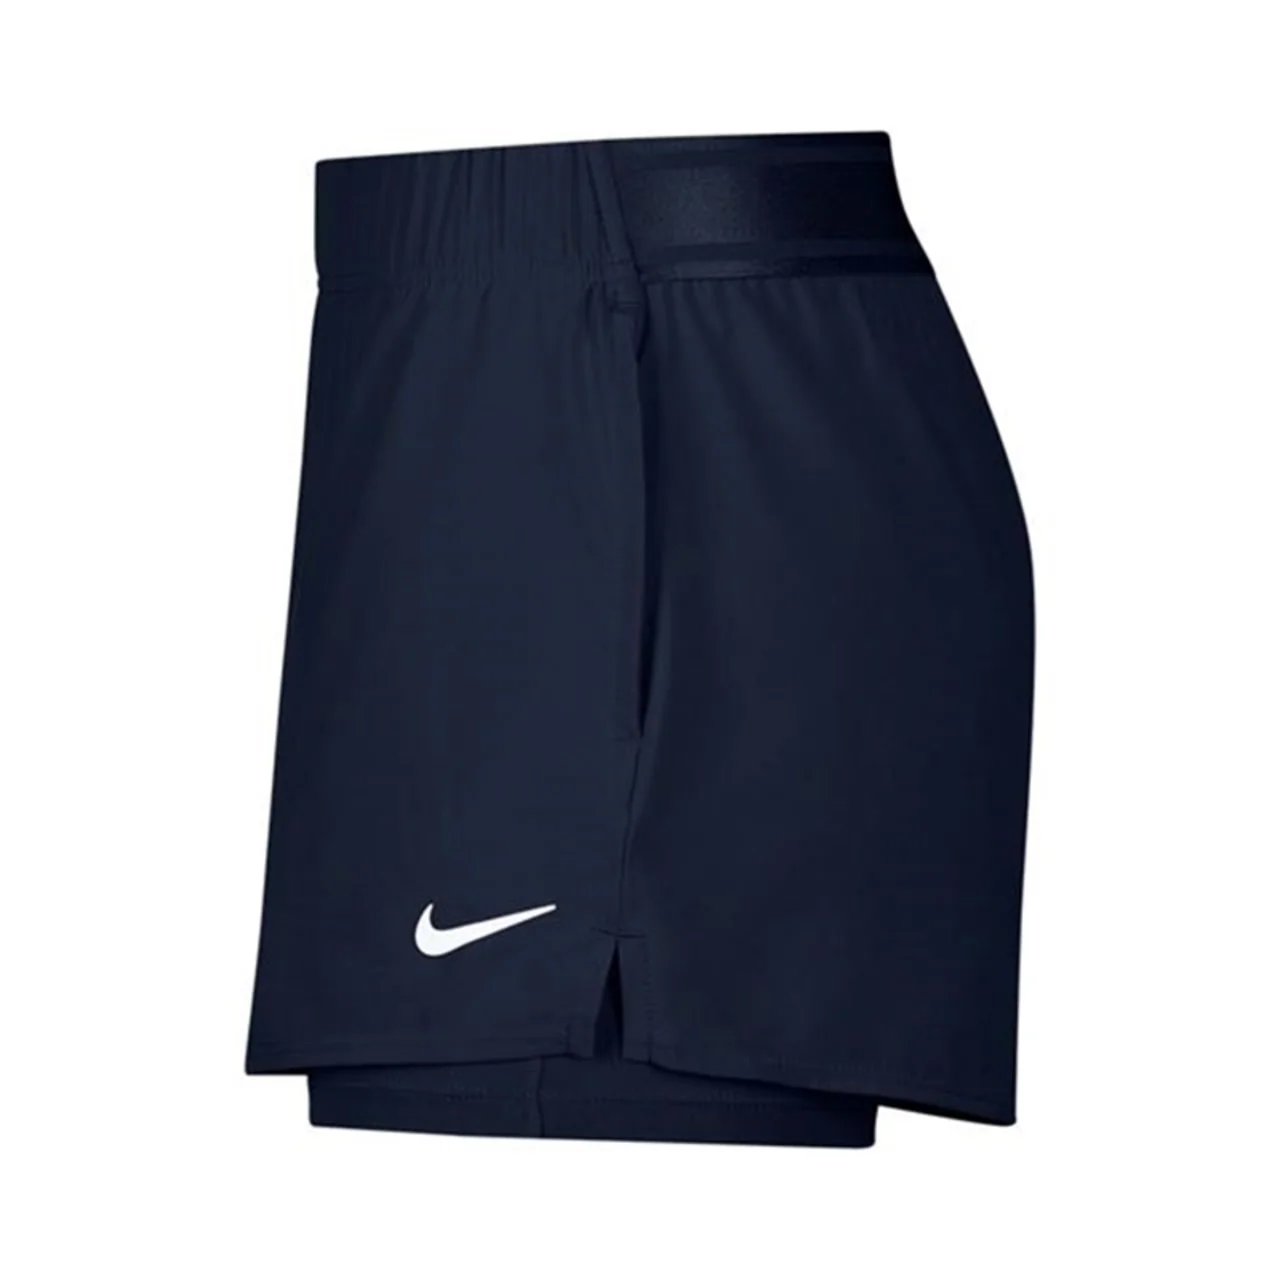 Nike Court Flex Shorts Women Navy (With Pockets)